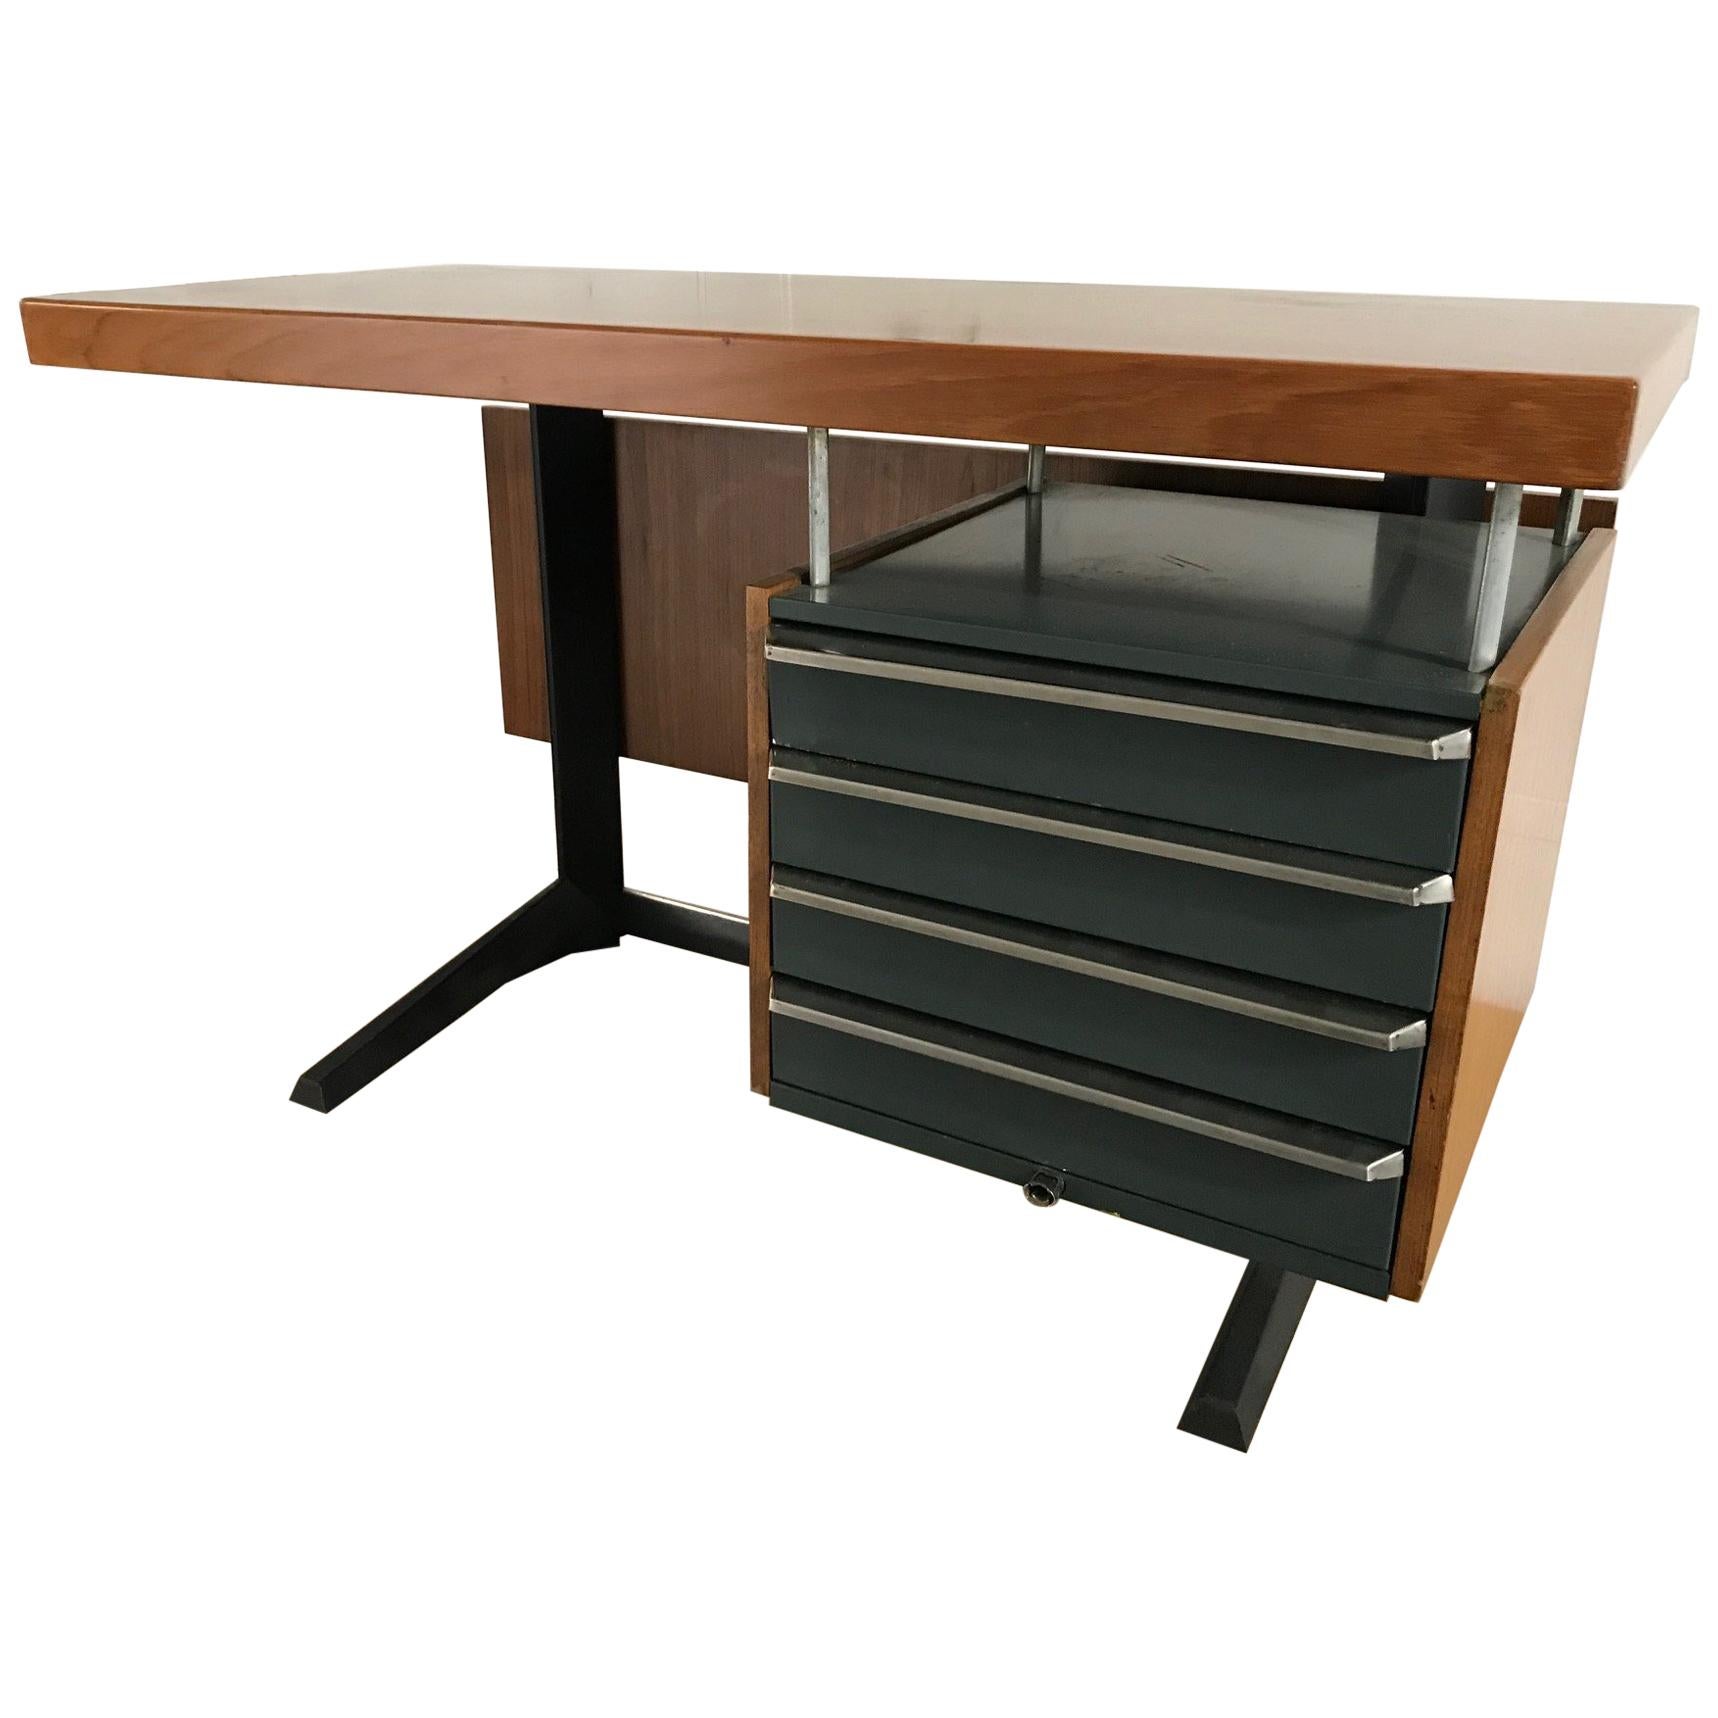 Desk by Daciano da COSTA for Metalurgica da Longra